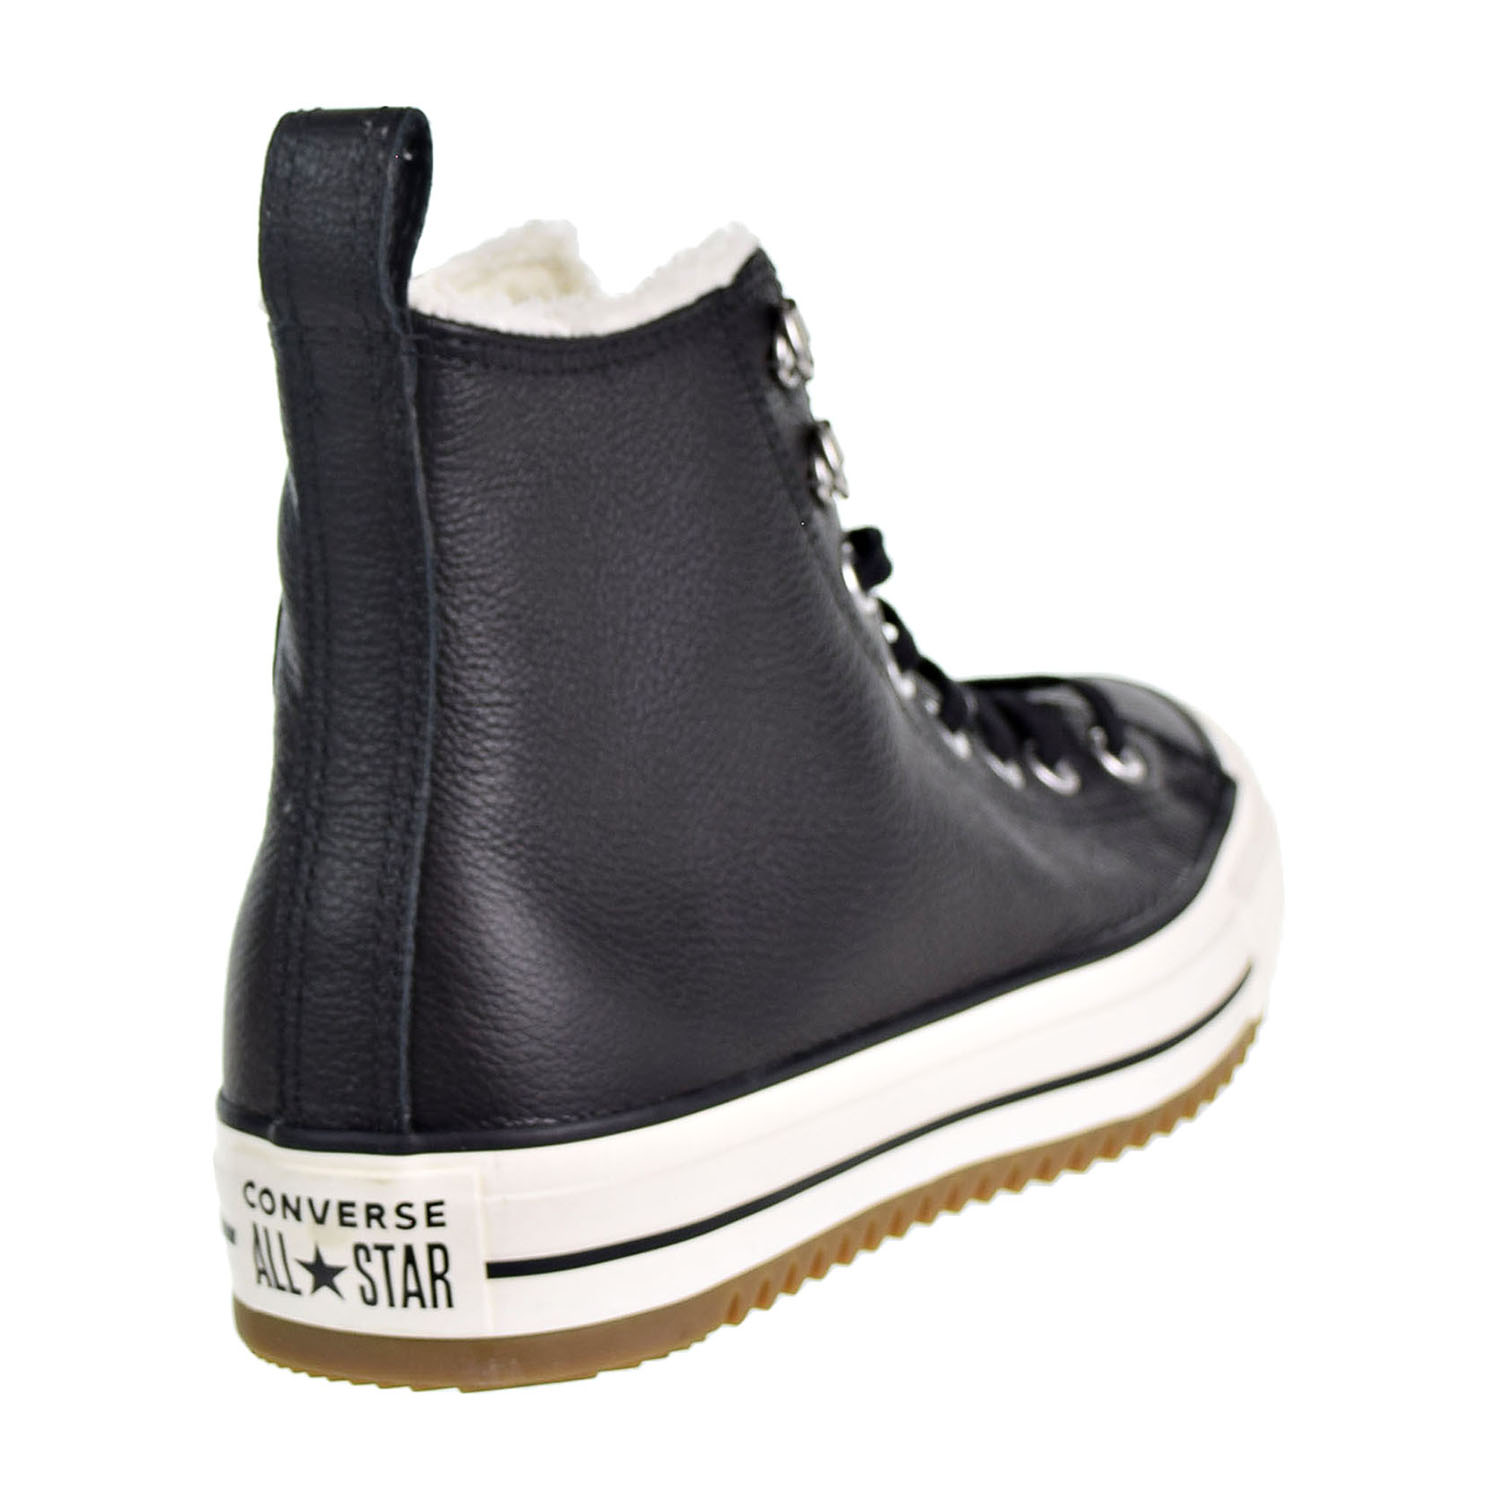 Converse Chuck Taylor All Star Hiker Boot Men's/Big Kids Shoes Black-Egret-Gum 161512c - image 3 of 6